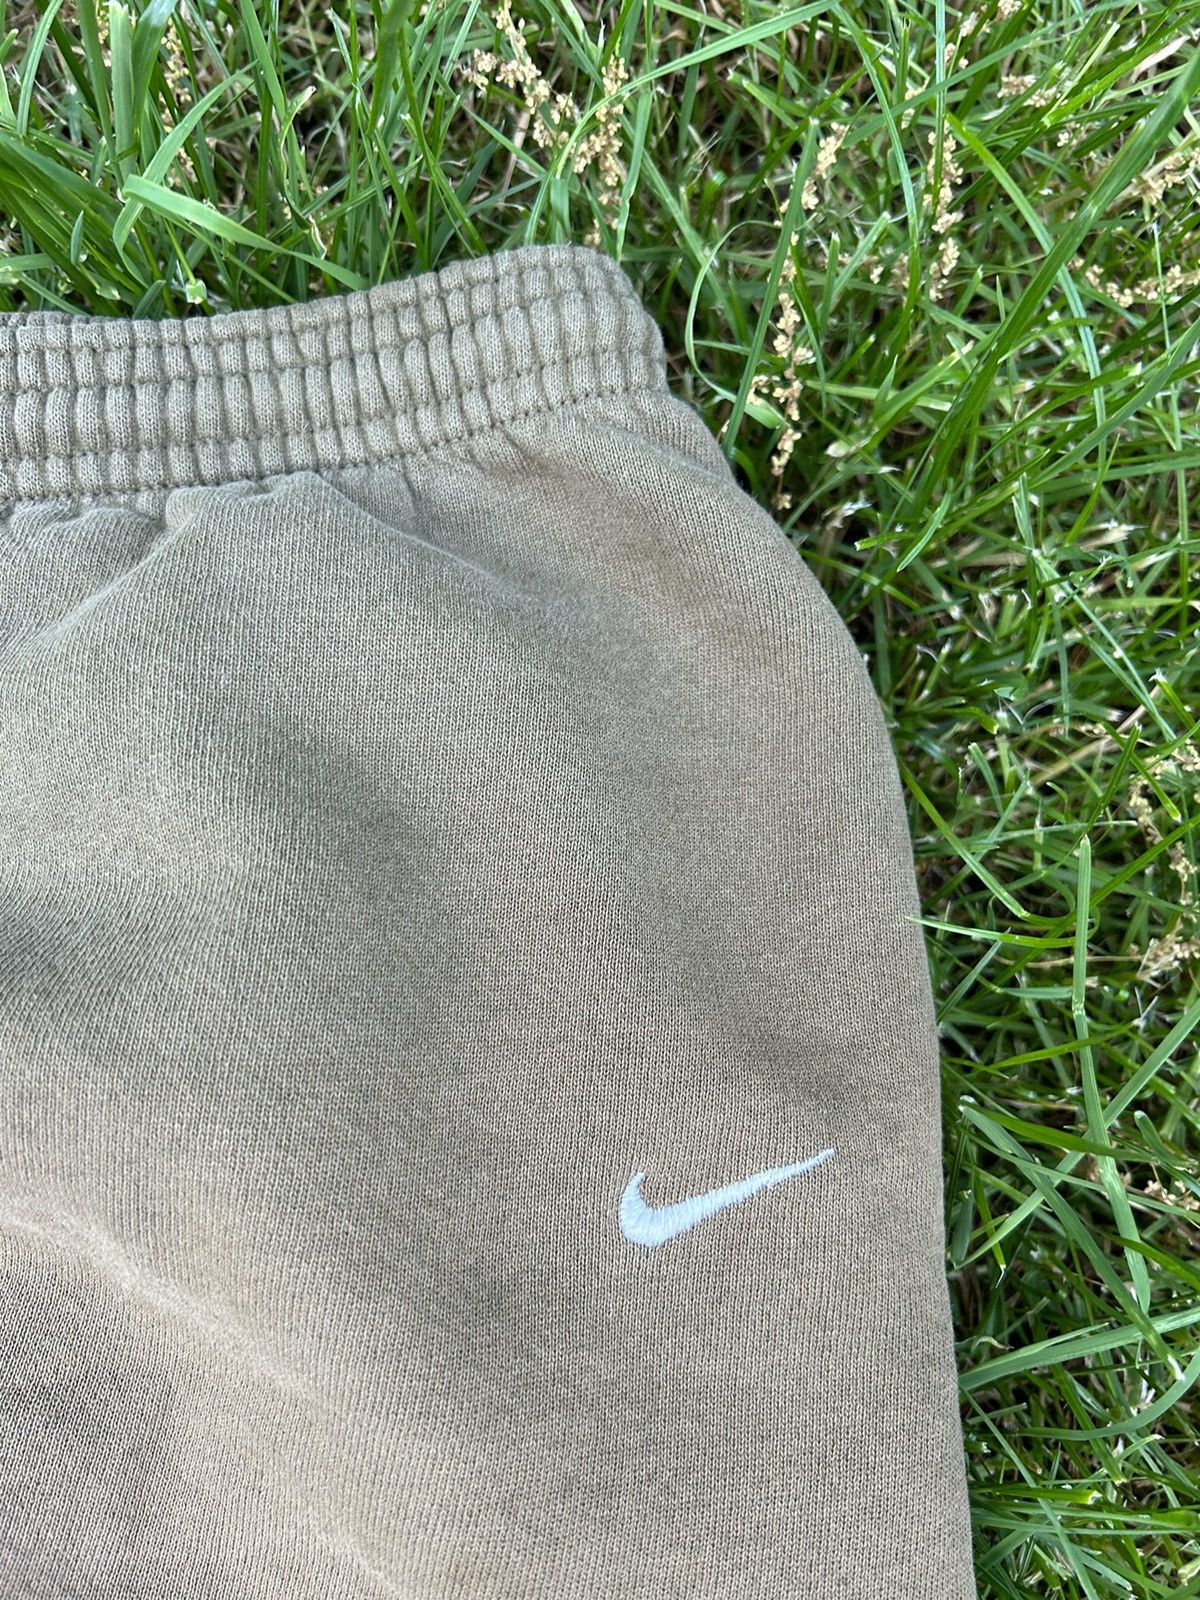 Nike Vintage Nike Sweatpants Size US 32 / EU 48 - 5 Thumbnail